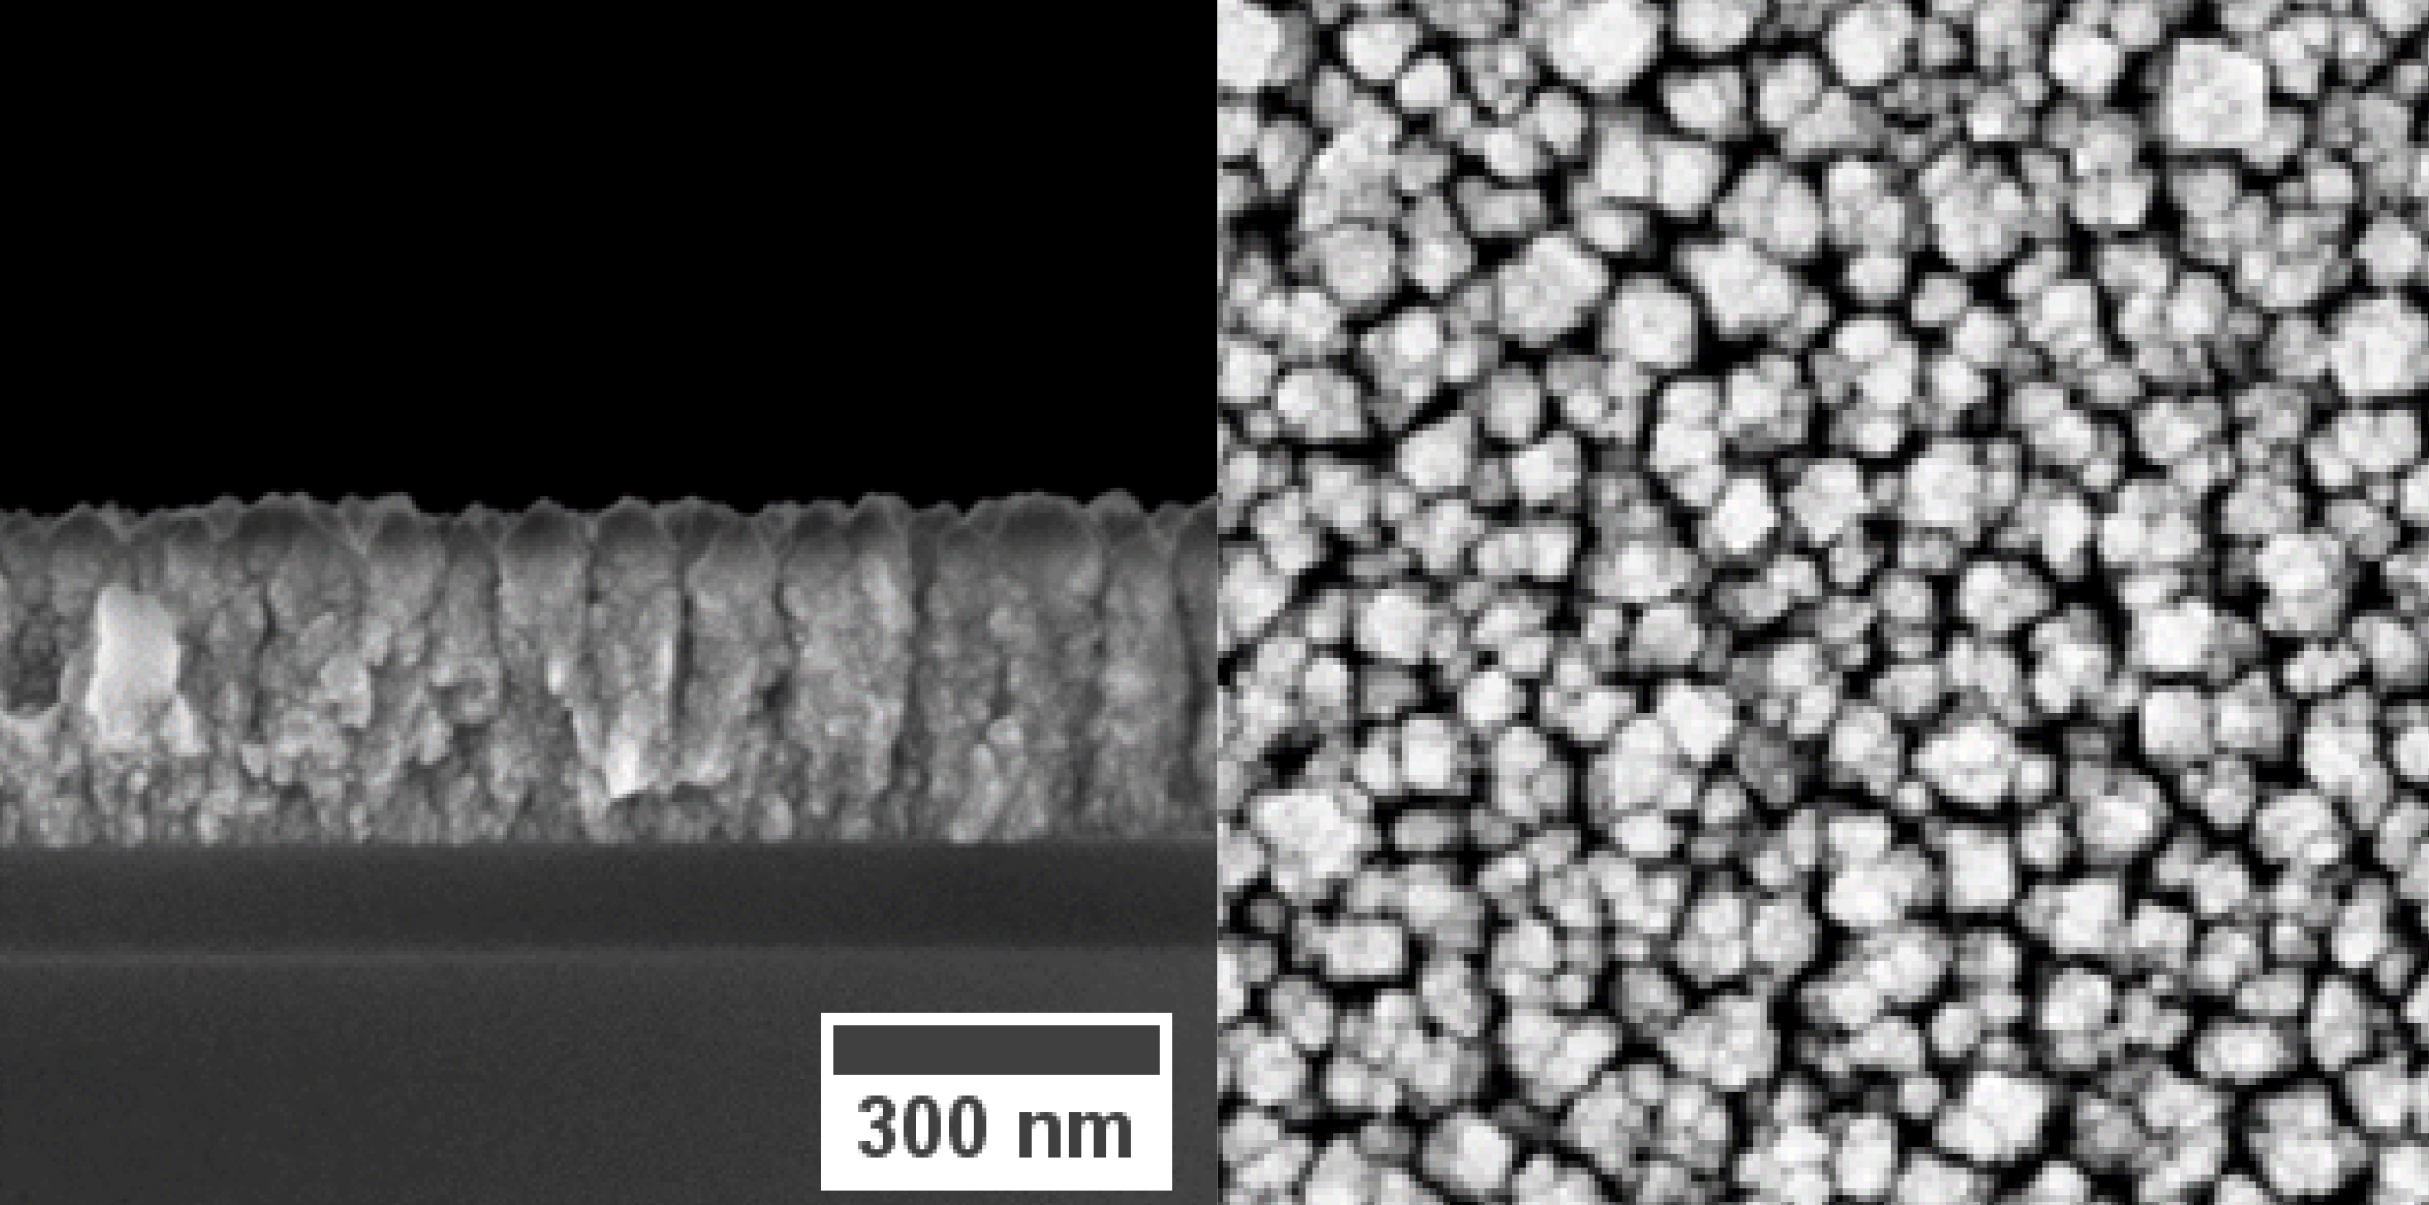 SEM image of a cobalt oxide layer.